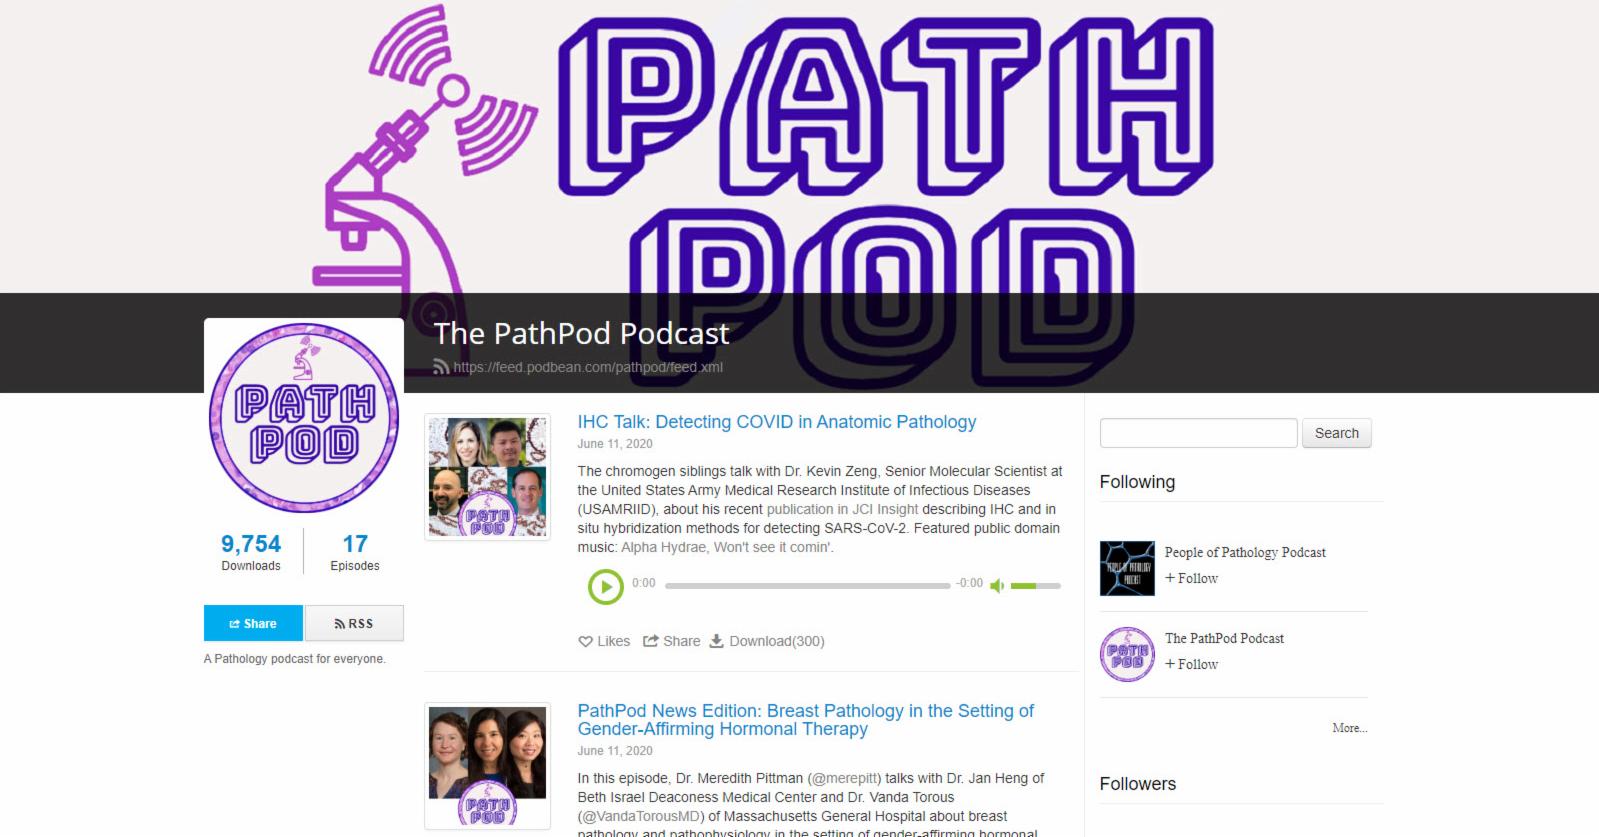 PathPod: A Pathology Podcast for Everyone